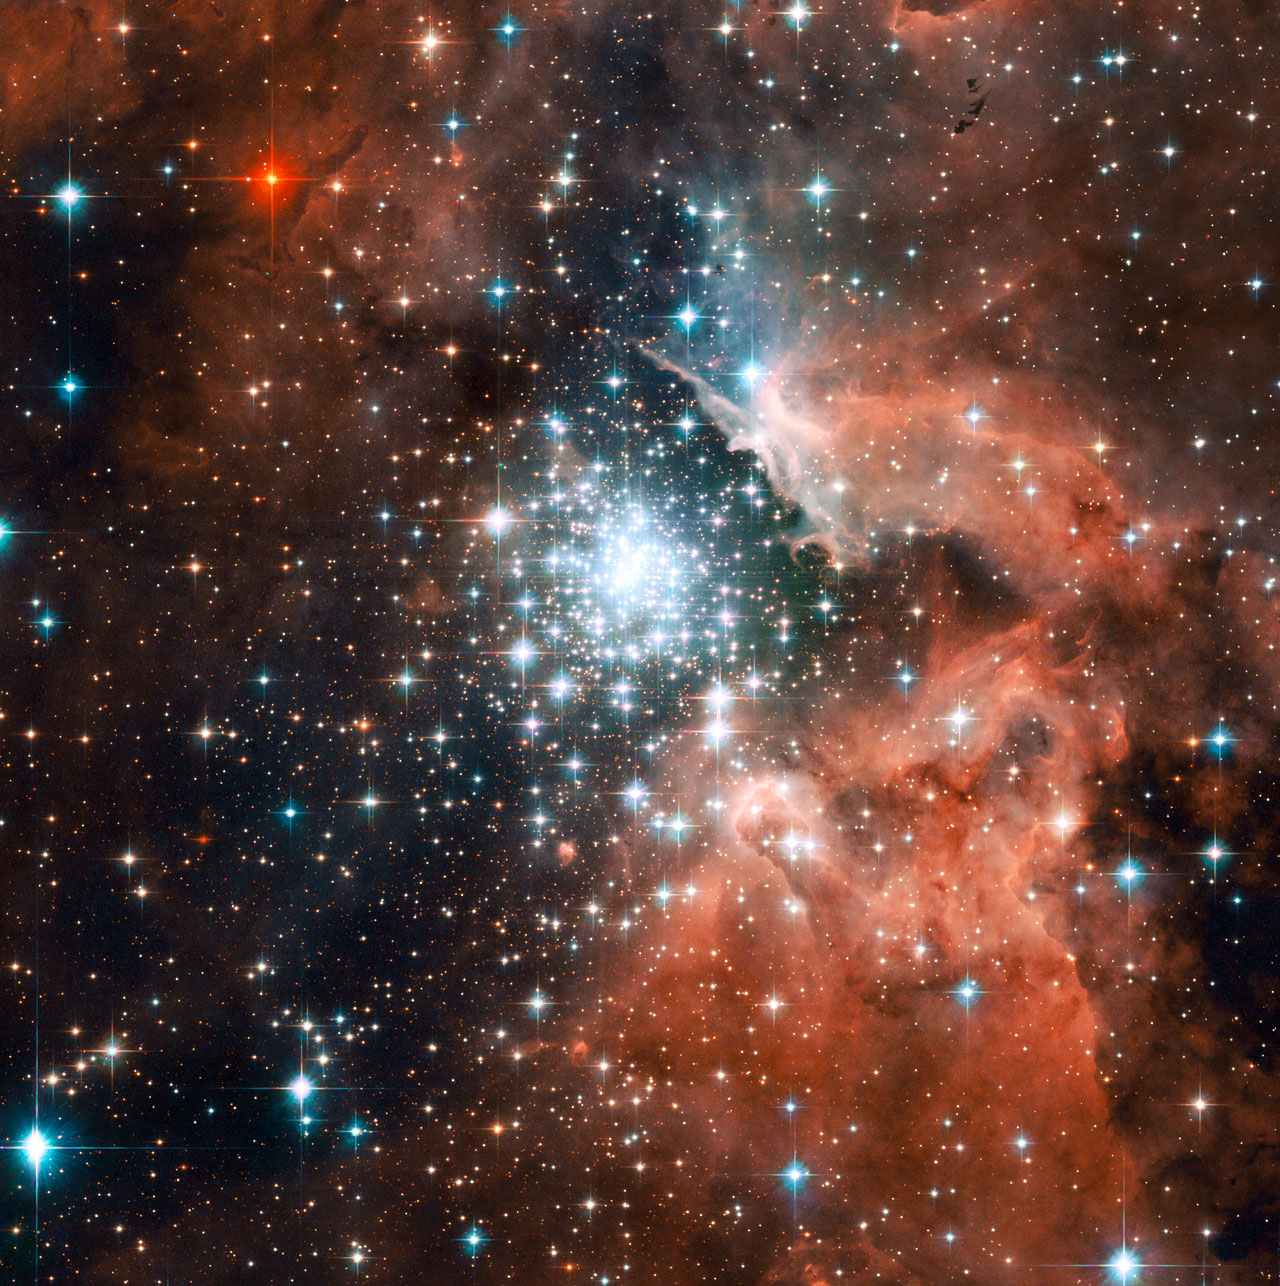 Nebulosa NGC 3603, cúmulo de estrellas — Astronoo